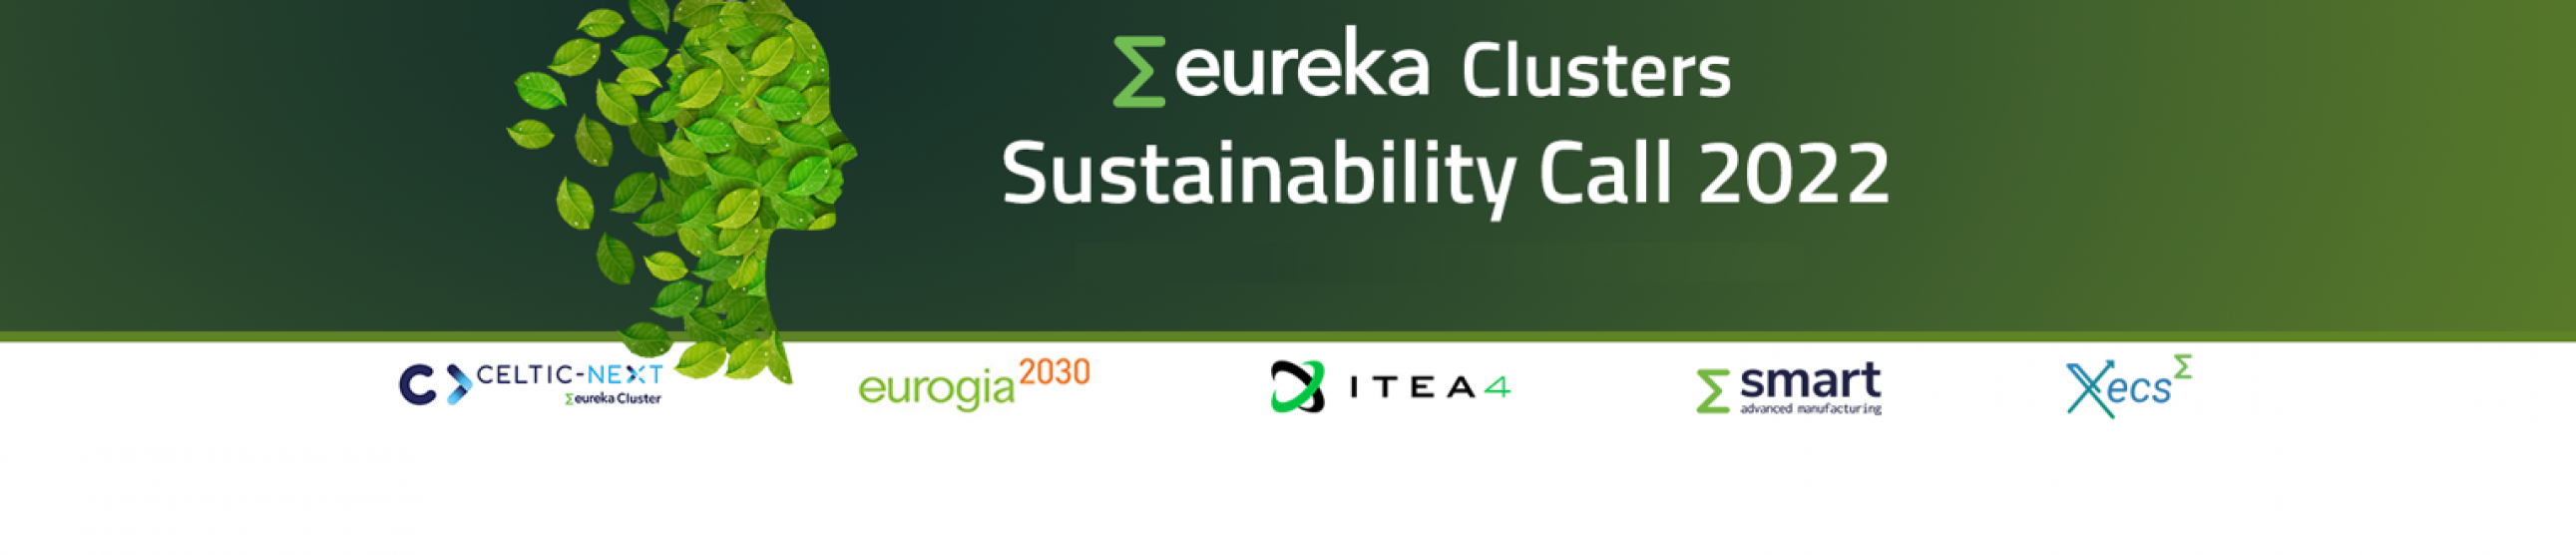 Eureka Clusters Sustainability Call 2022